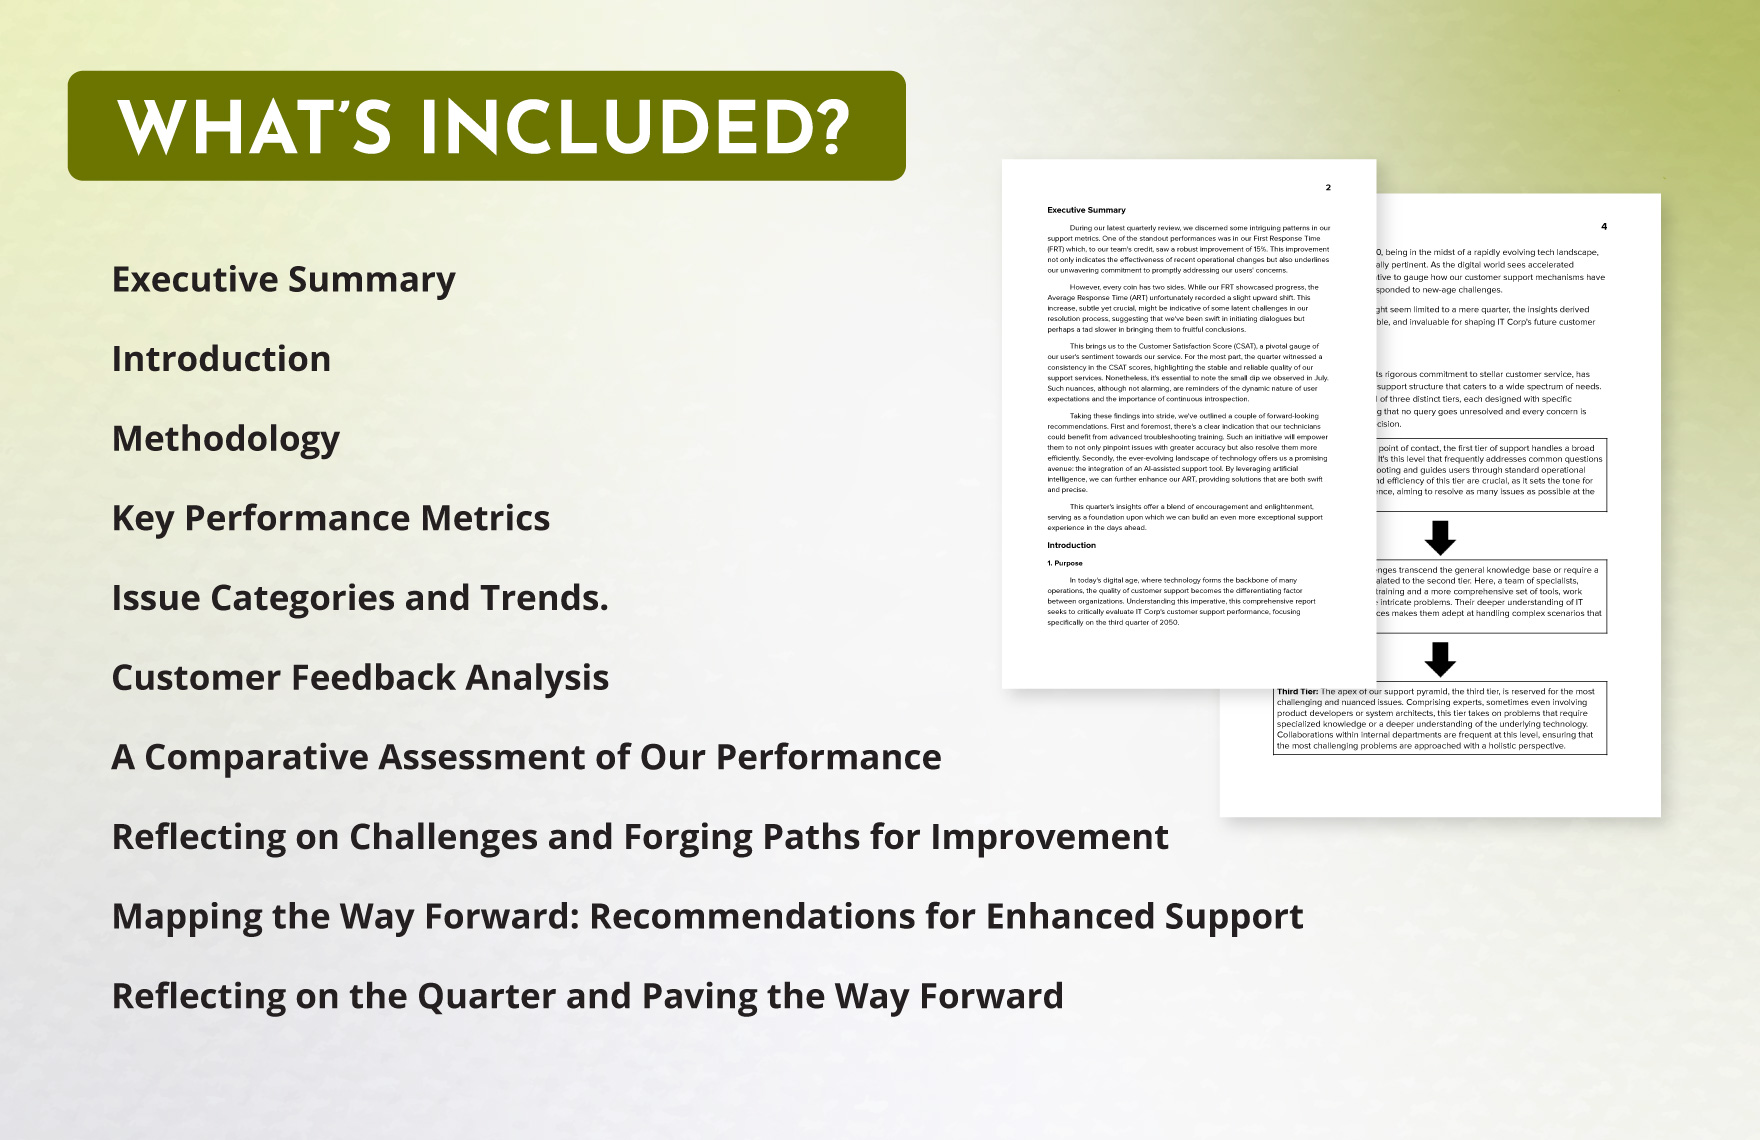 IT Customer Support Metrics Analysis Report 